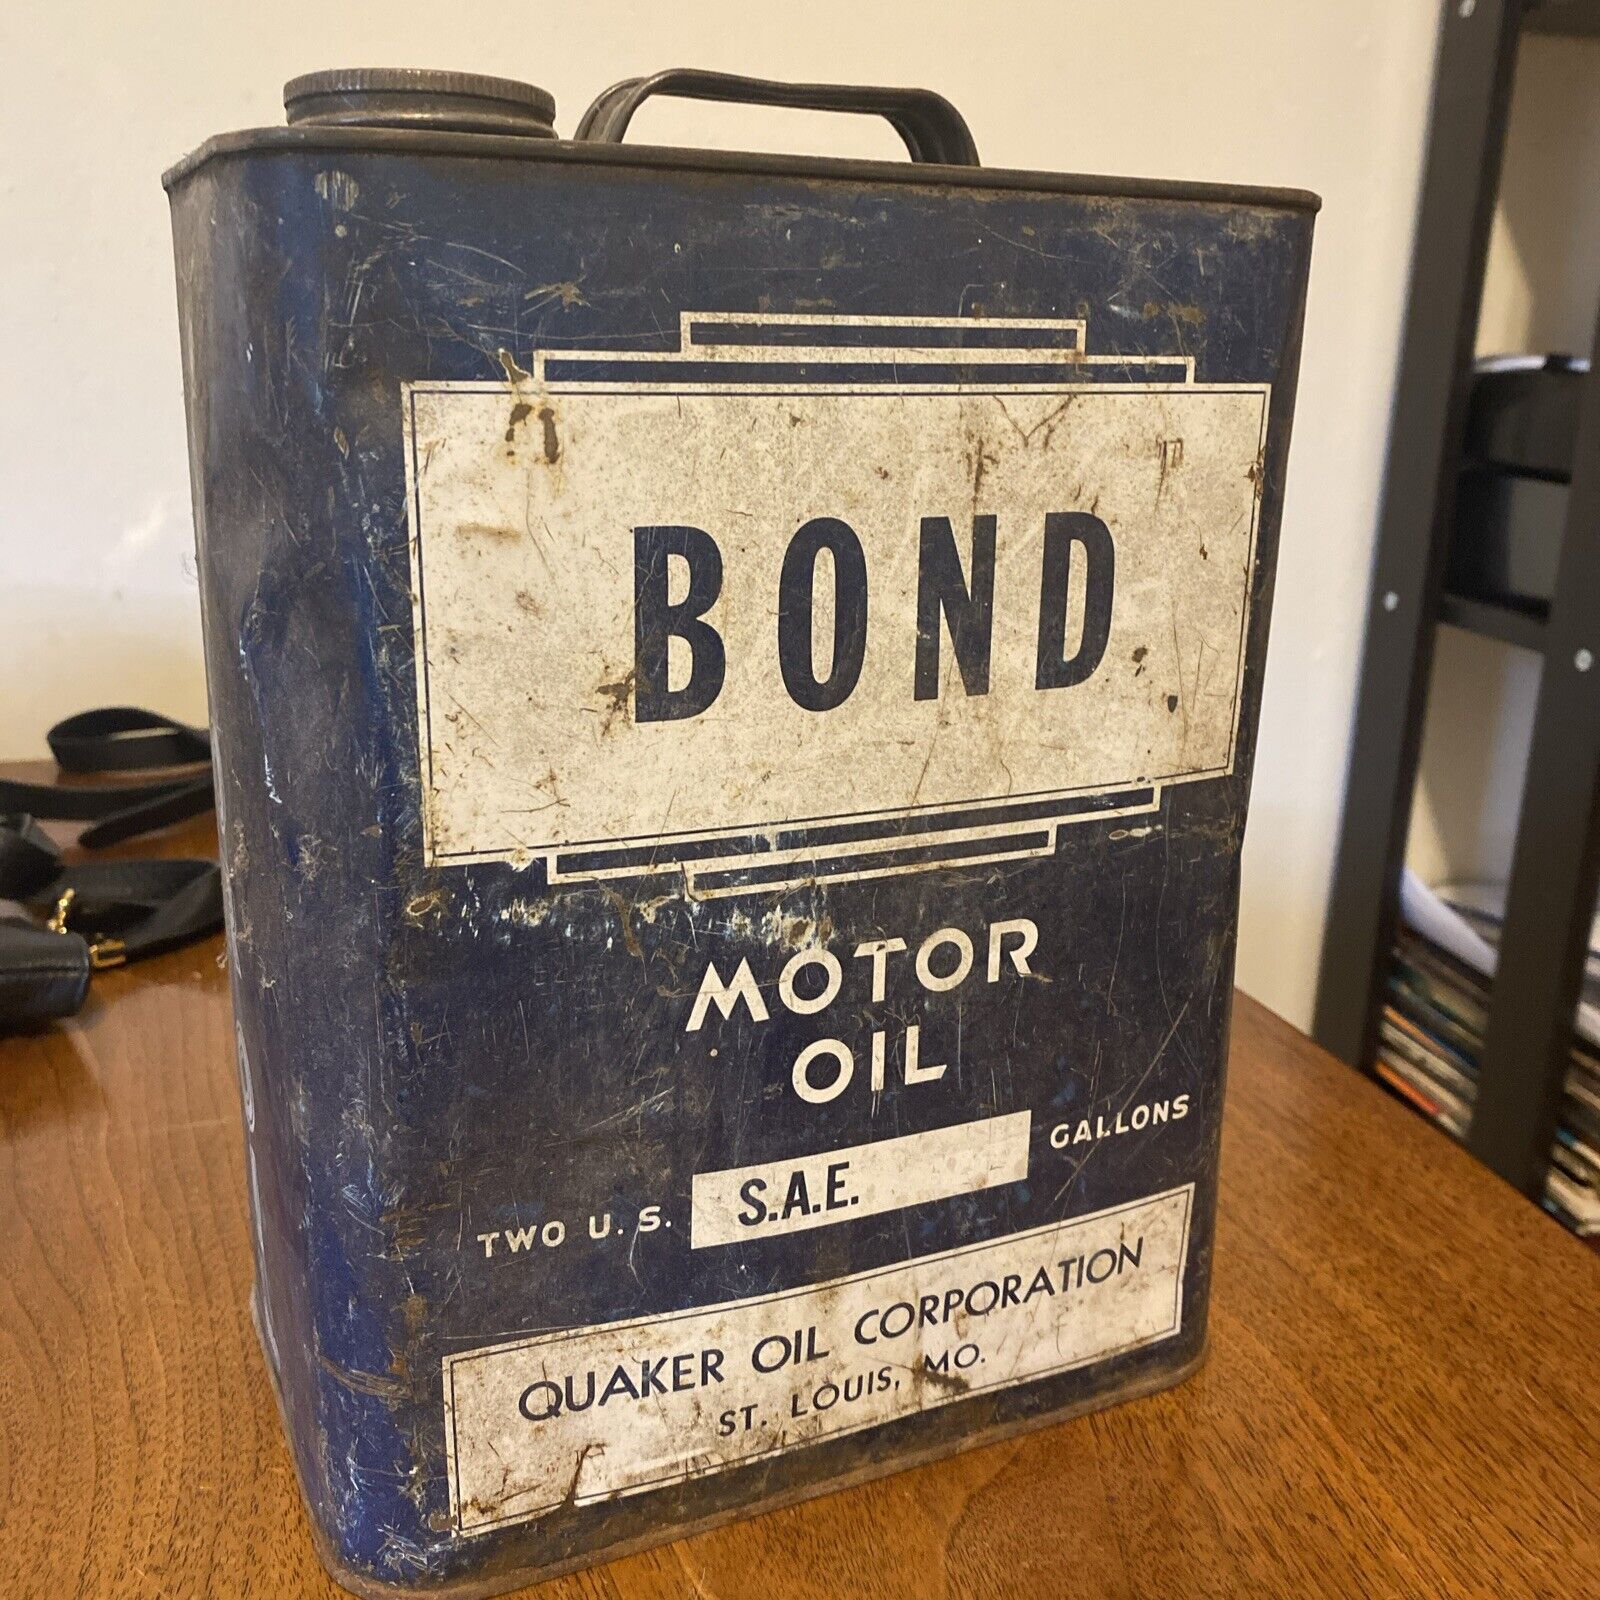 BOND Motor Oil 2 Gallon Quaker Oil Corporation St Louis Mo Old Vintage Oil Can